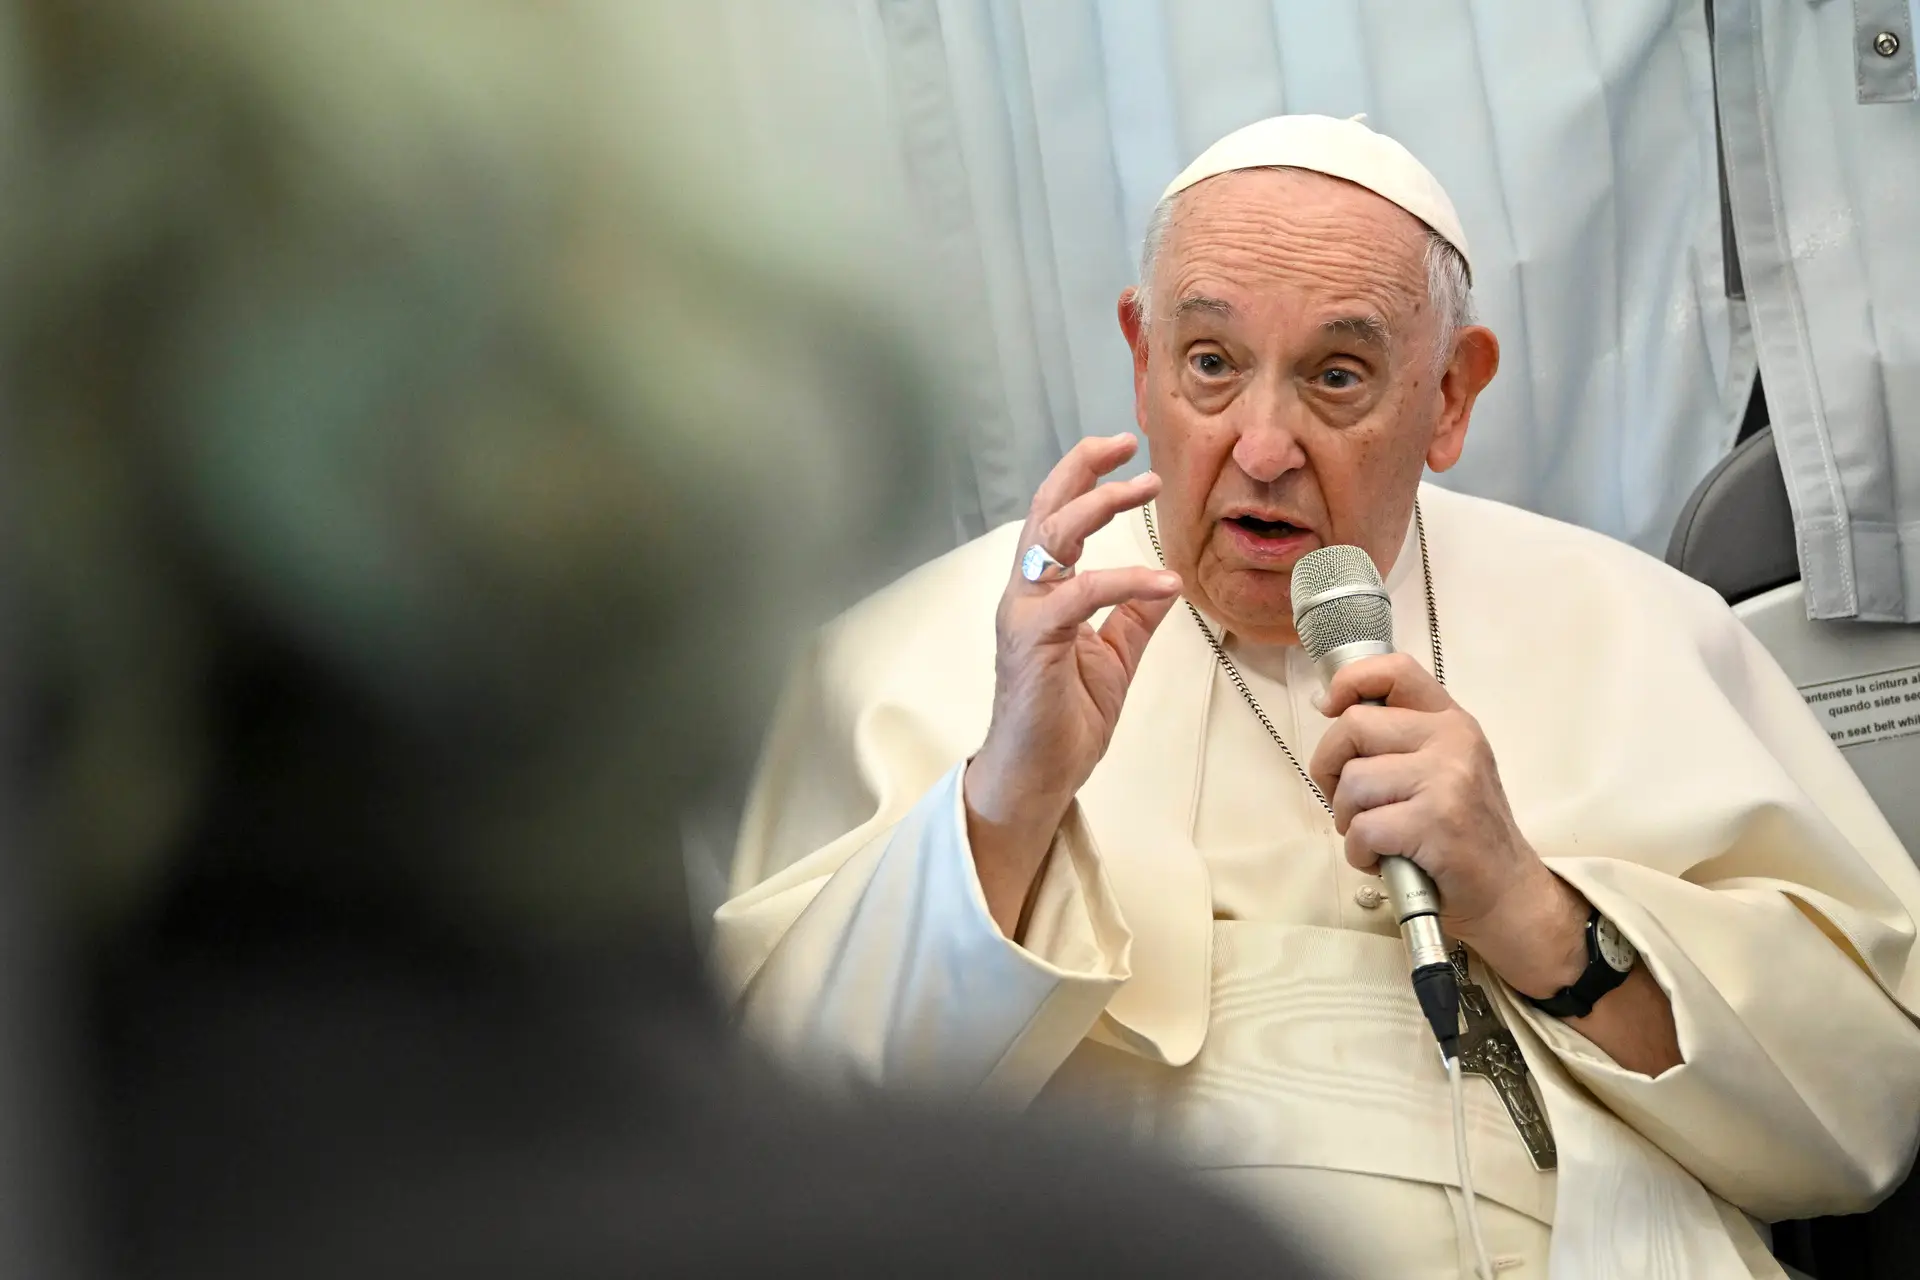 Santo brasileiro: Papa Francisco aprova primeira etapa para